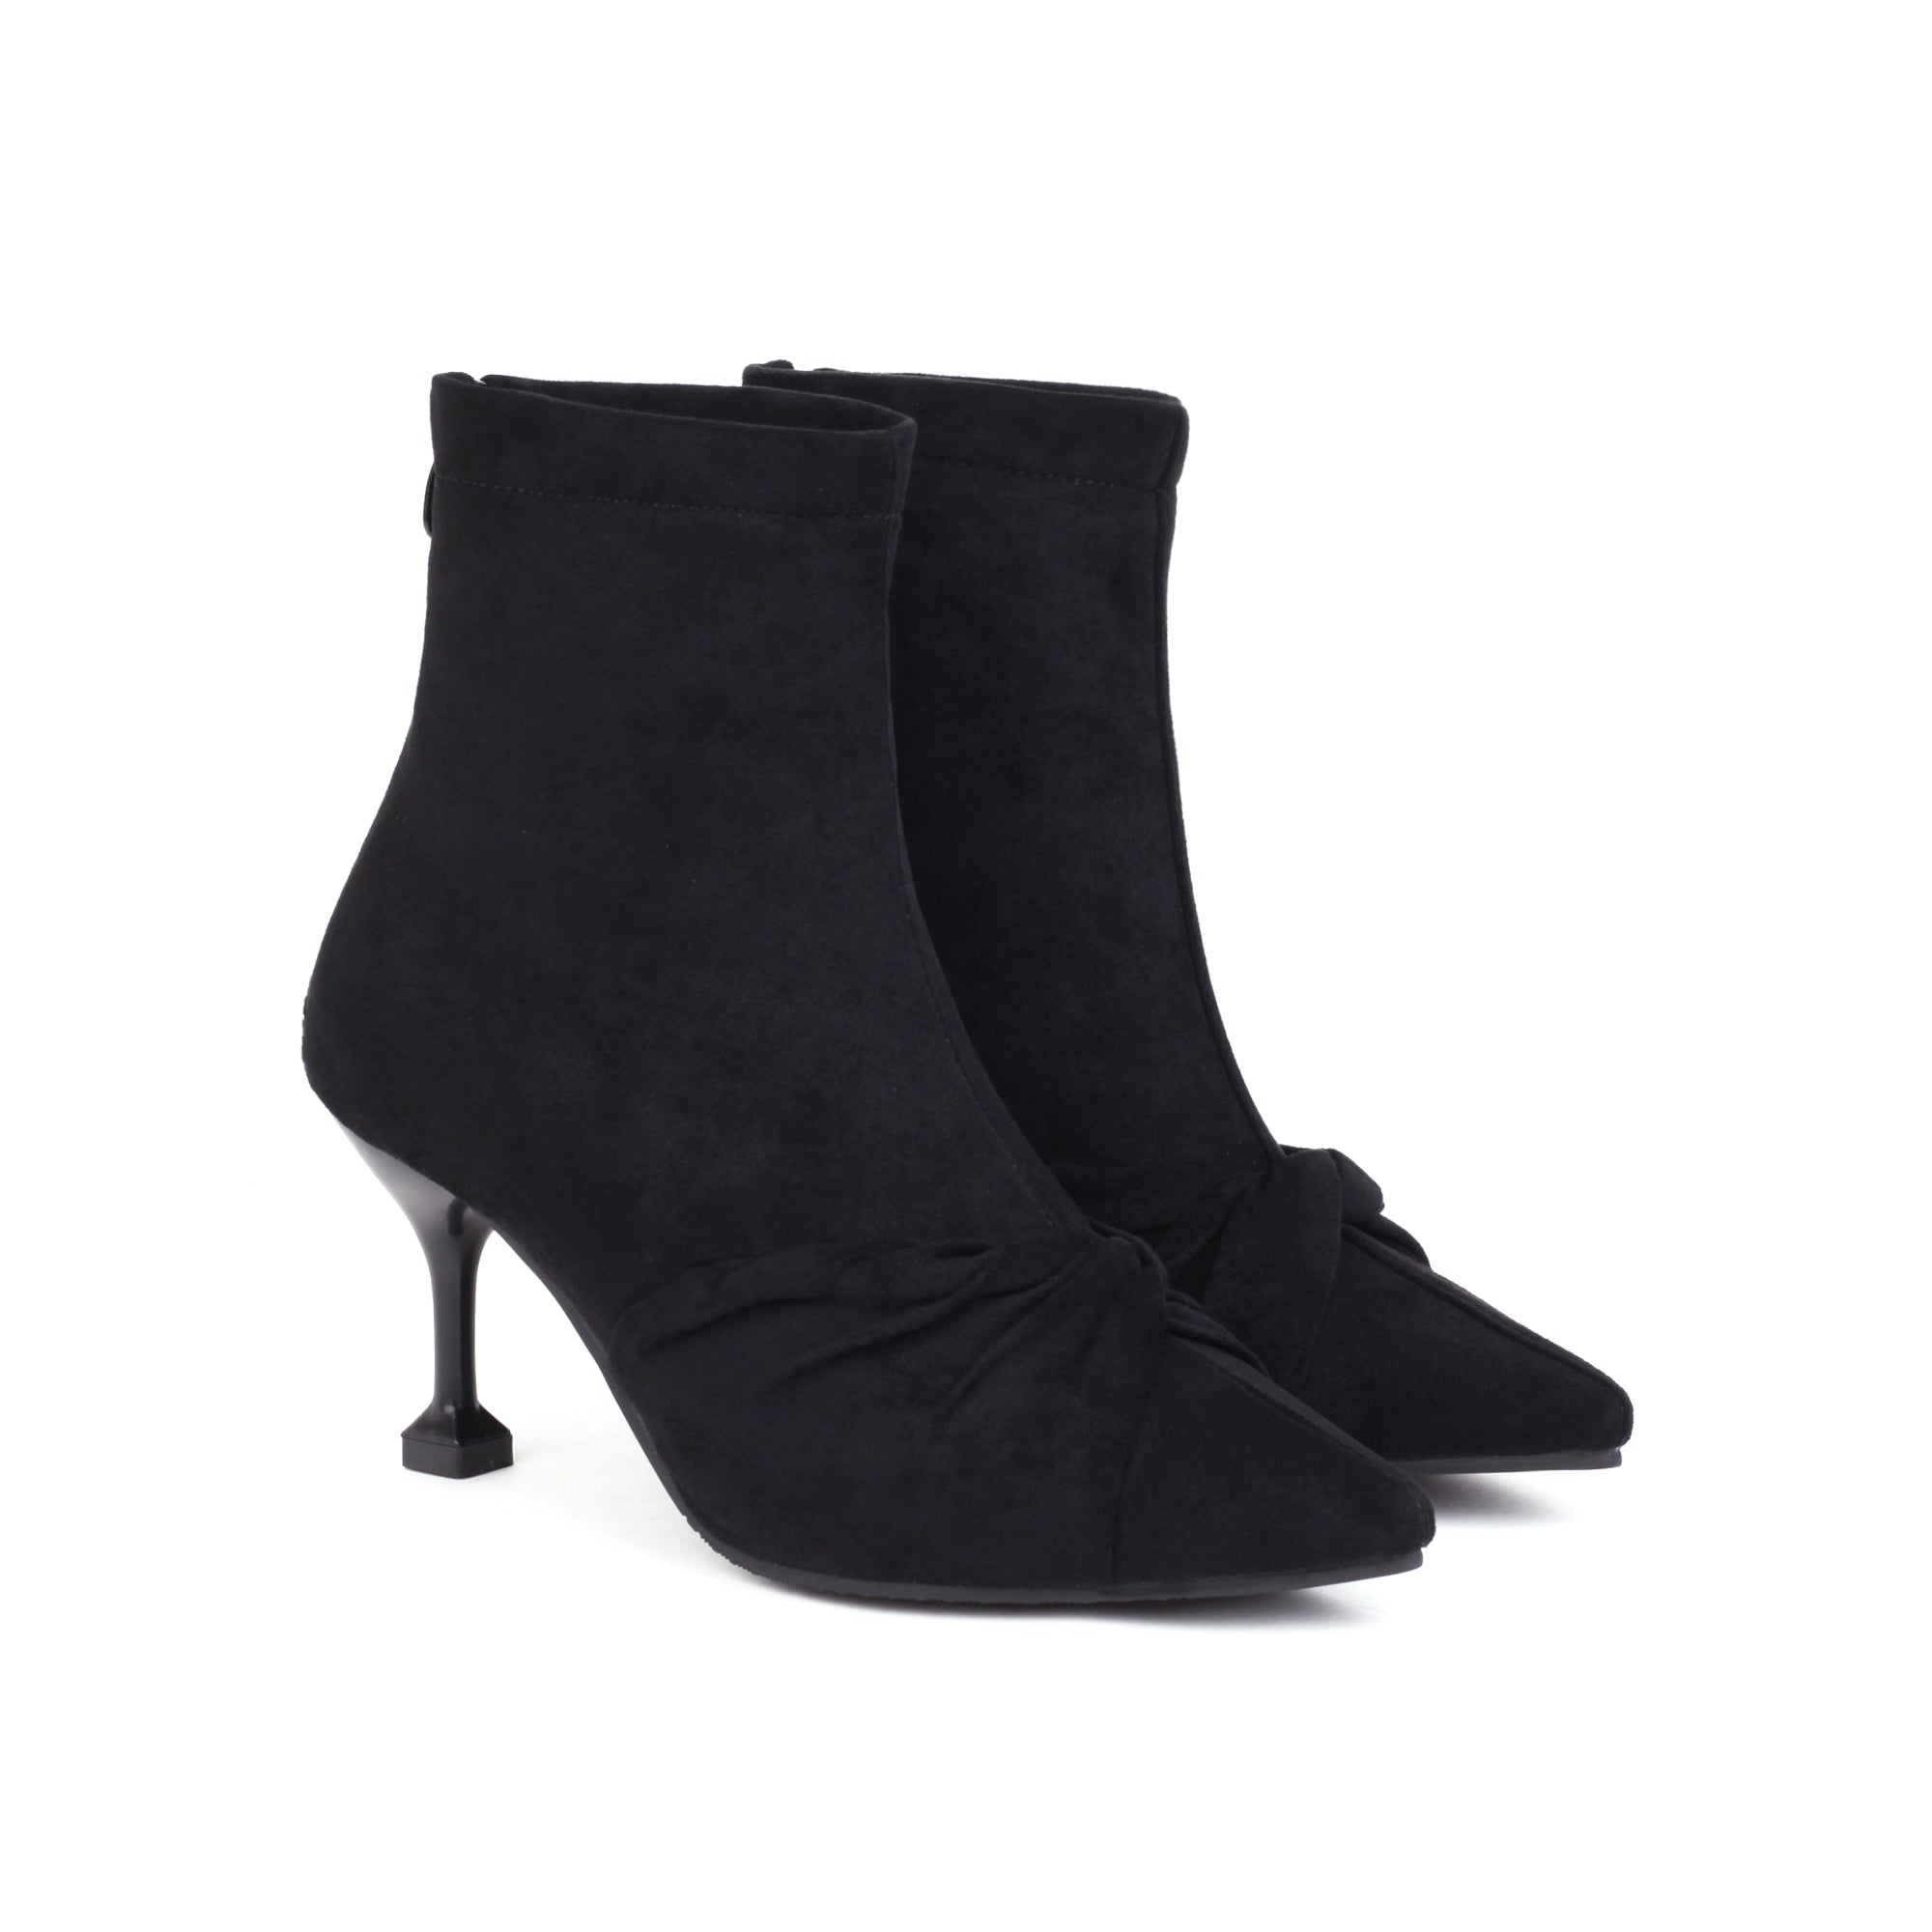 Bigsizeheels Stylish Slip-On Stiletto Heel Pointed Toe Banquet Thin Shoes - Black freeshipping - bigsizeheel®-size5-size15 -All Plus Sizes Available!